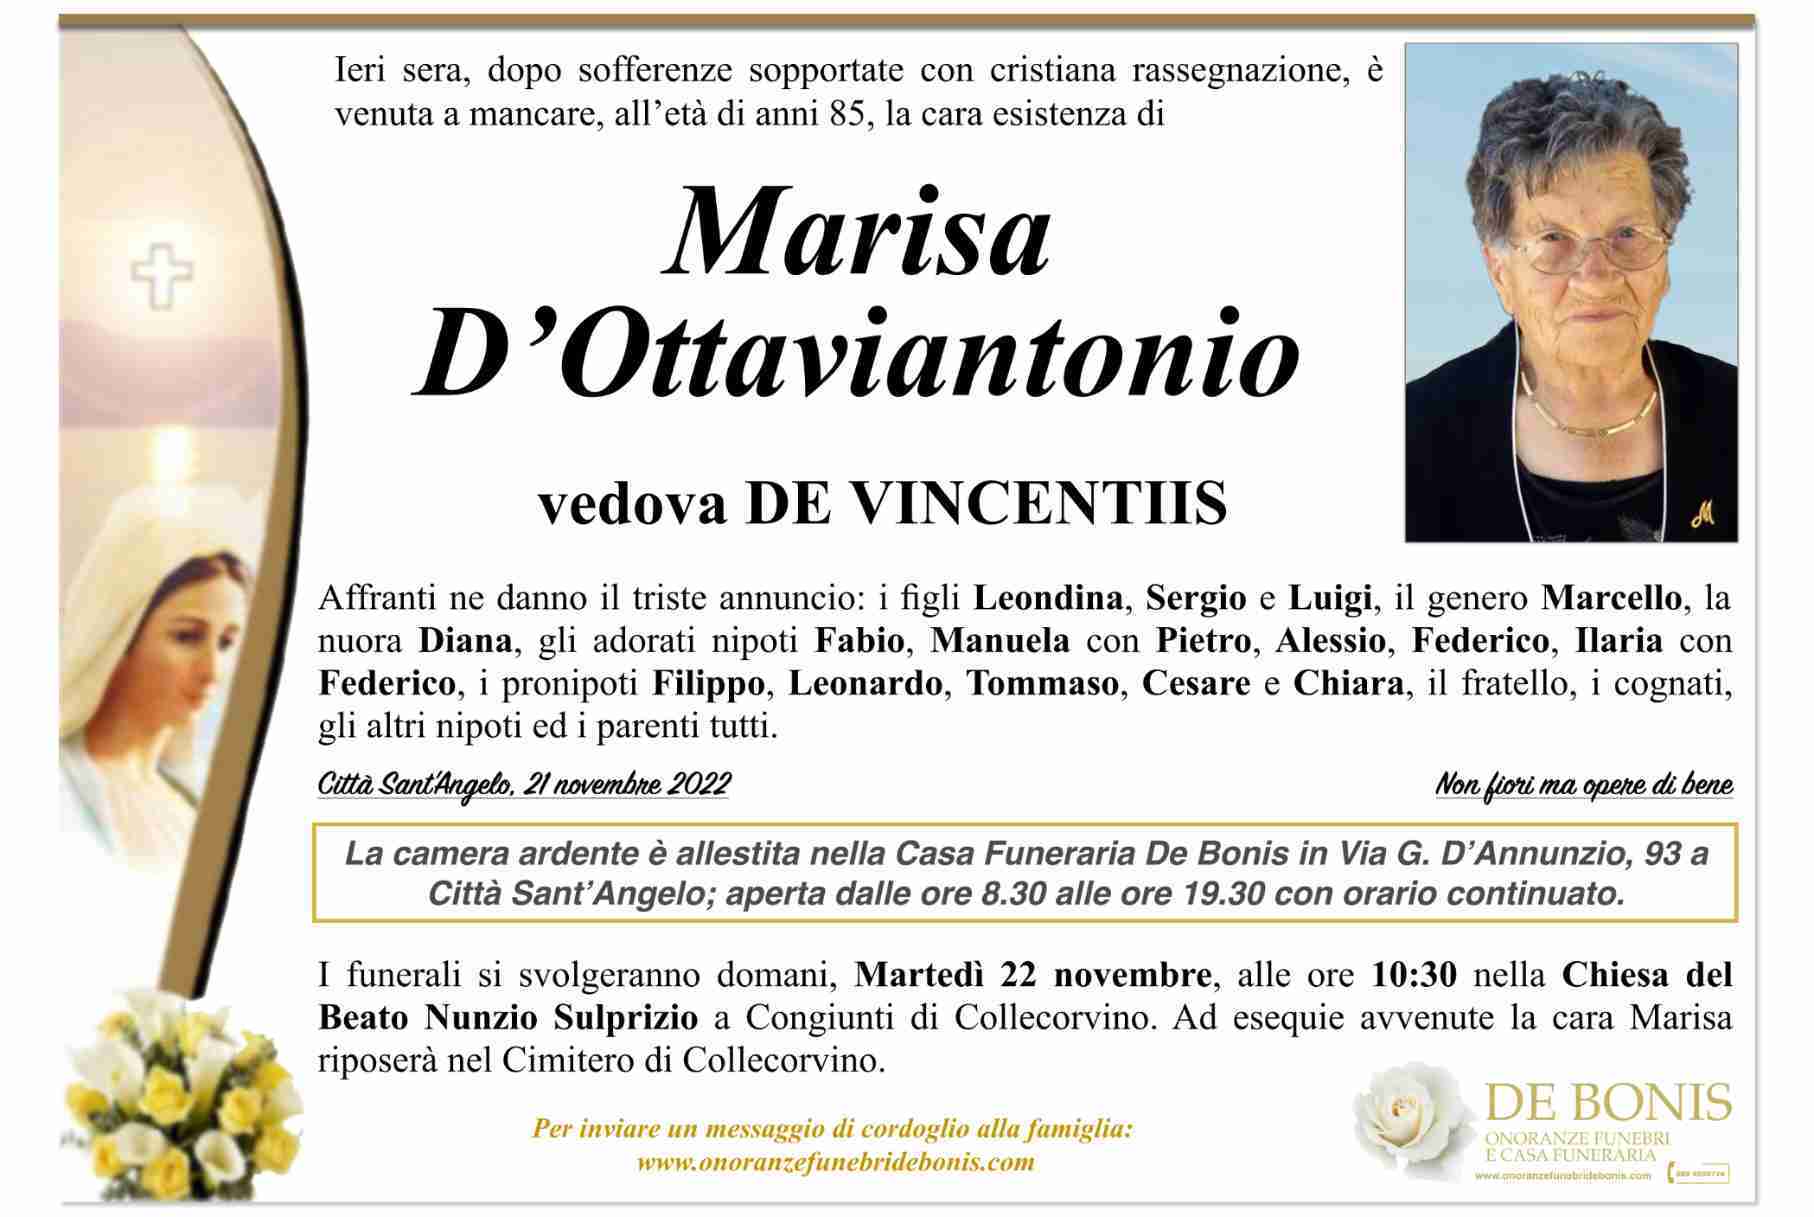 Marisa D'Ottaviantonio